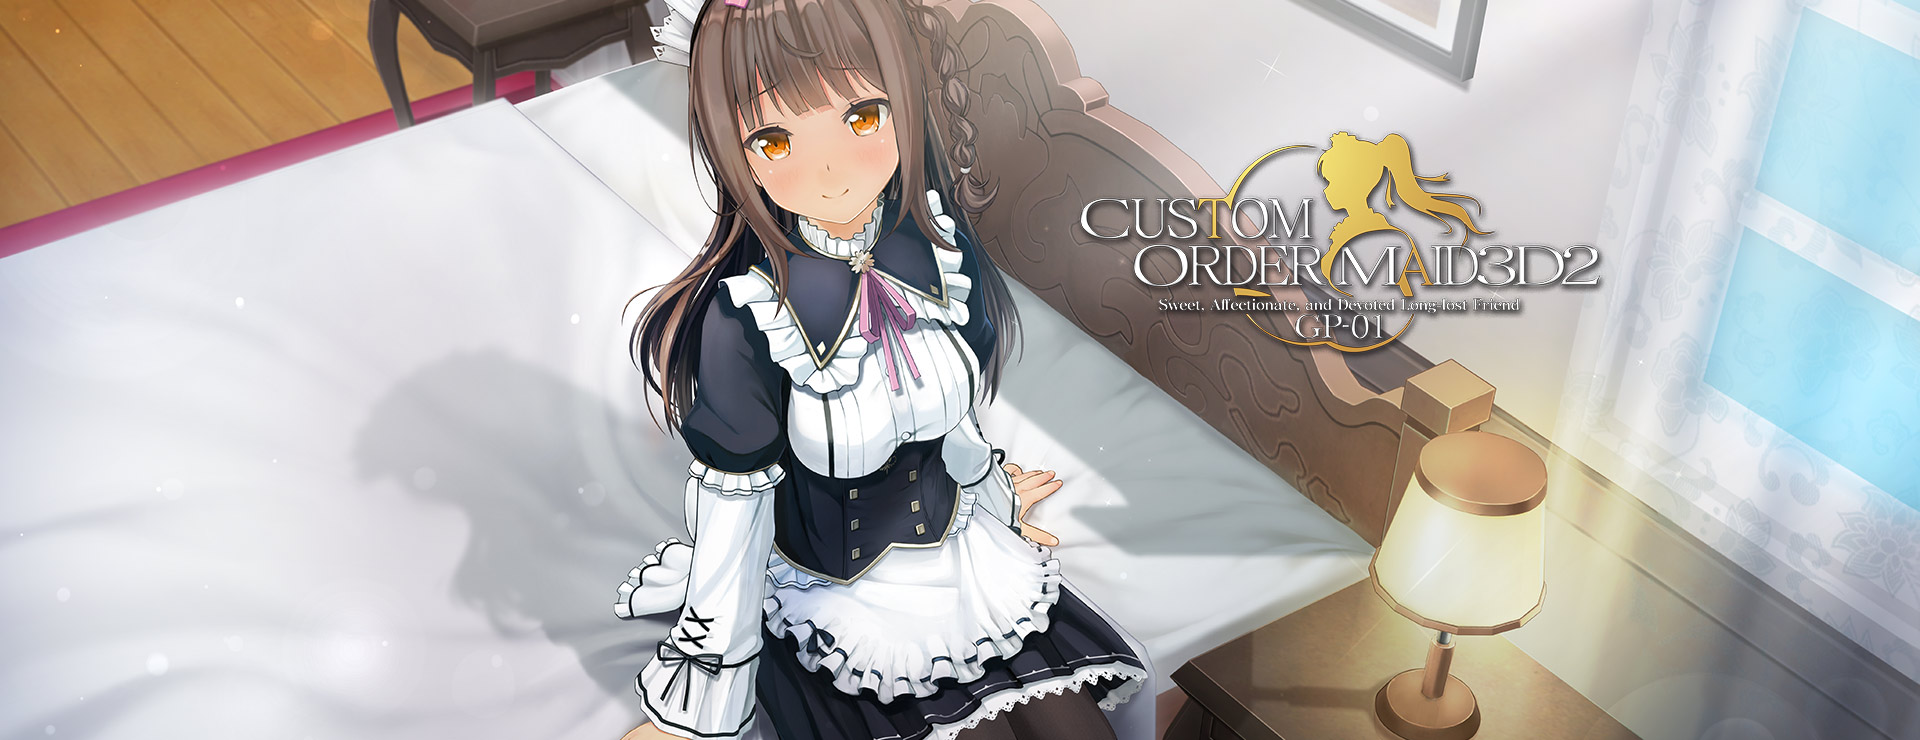 Custom Order Maid 3D 2: Sweet, Affectionate, and Devoted Long-lost Friend GP01 - シミュレーション ゲーム